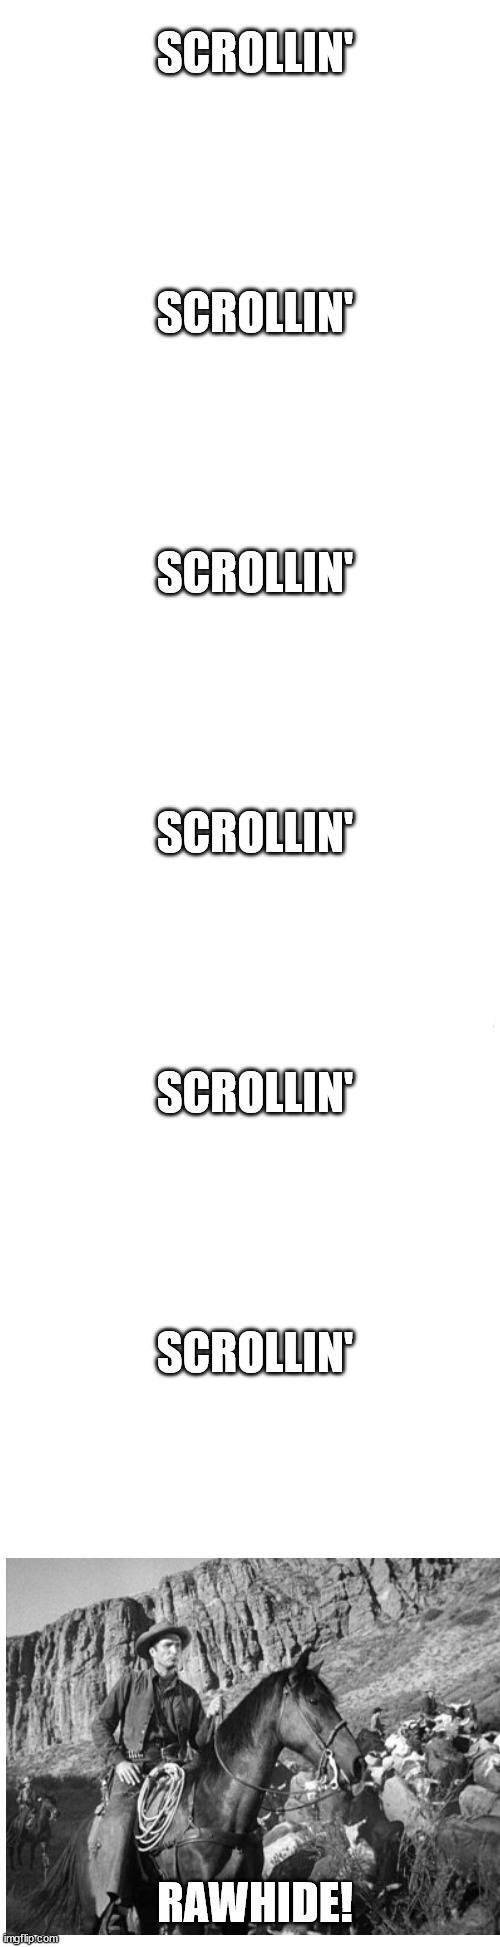 Scrollin' | SCROLLIN'
 
 
 
 
SCROLLIN'
 
 
 
 
SCROLLIN'
 
 
 
 
SCROLLIN'
 
 
 
 
SCROLLIN'
 
 
 
  
SCROLLIN'; RAWHIDE! | image tagged in cringe | made w/ Imgflip meme maker